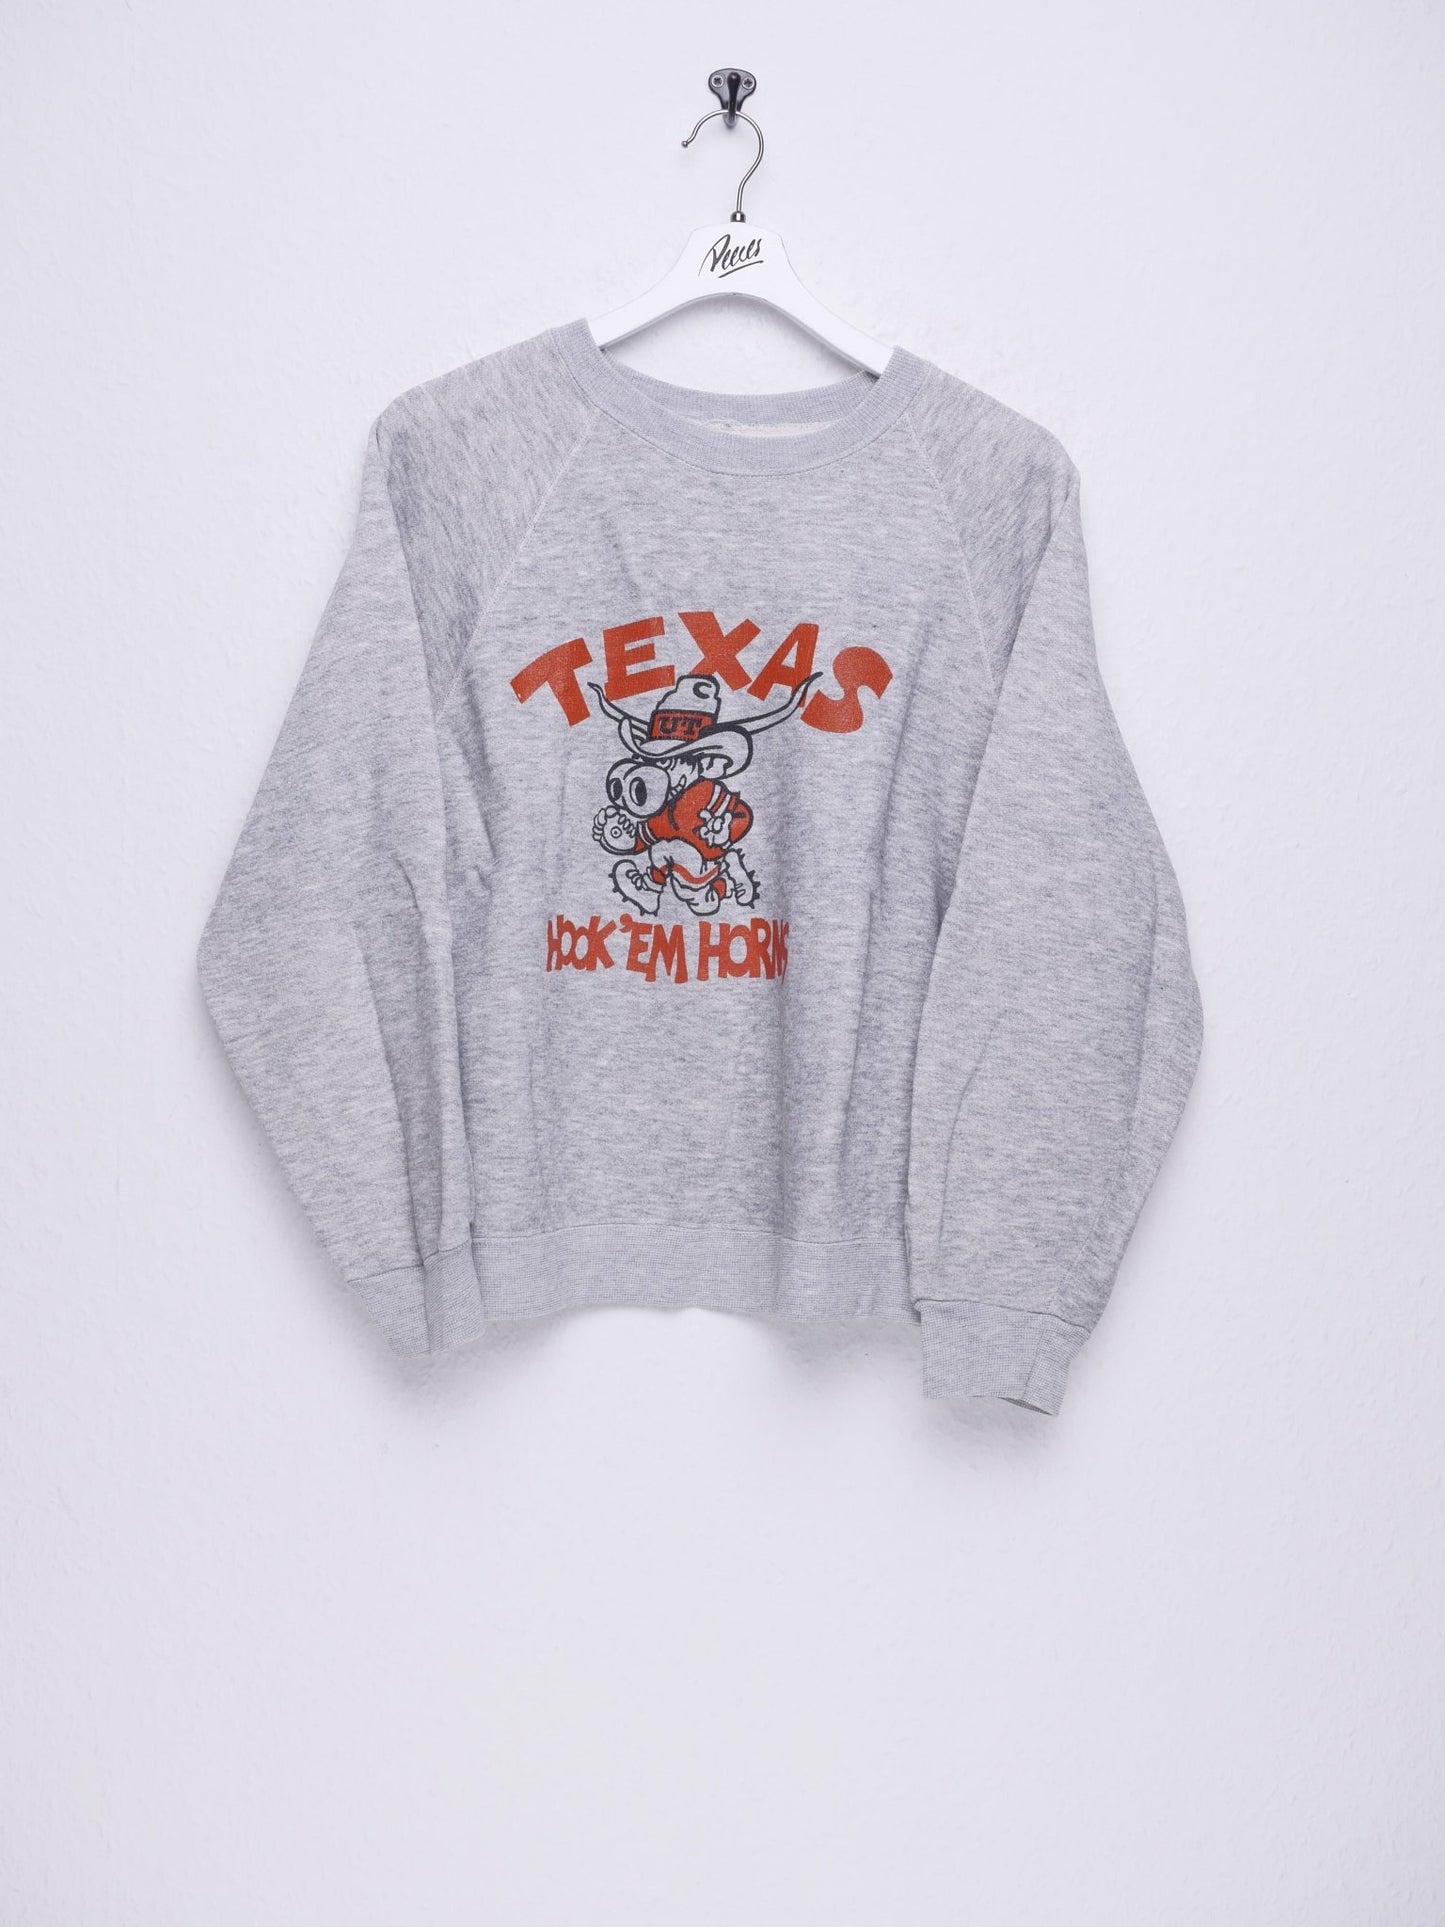 Texas 'Hook'em Horns' printed Graphic grey Sweater - Peeces